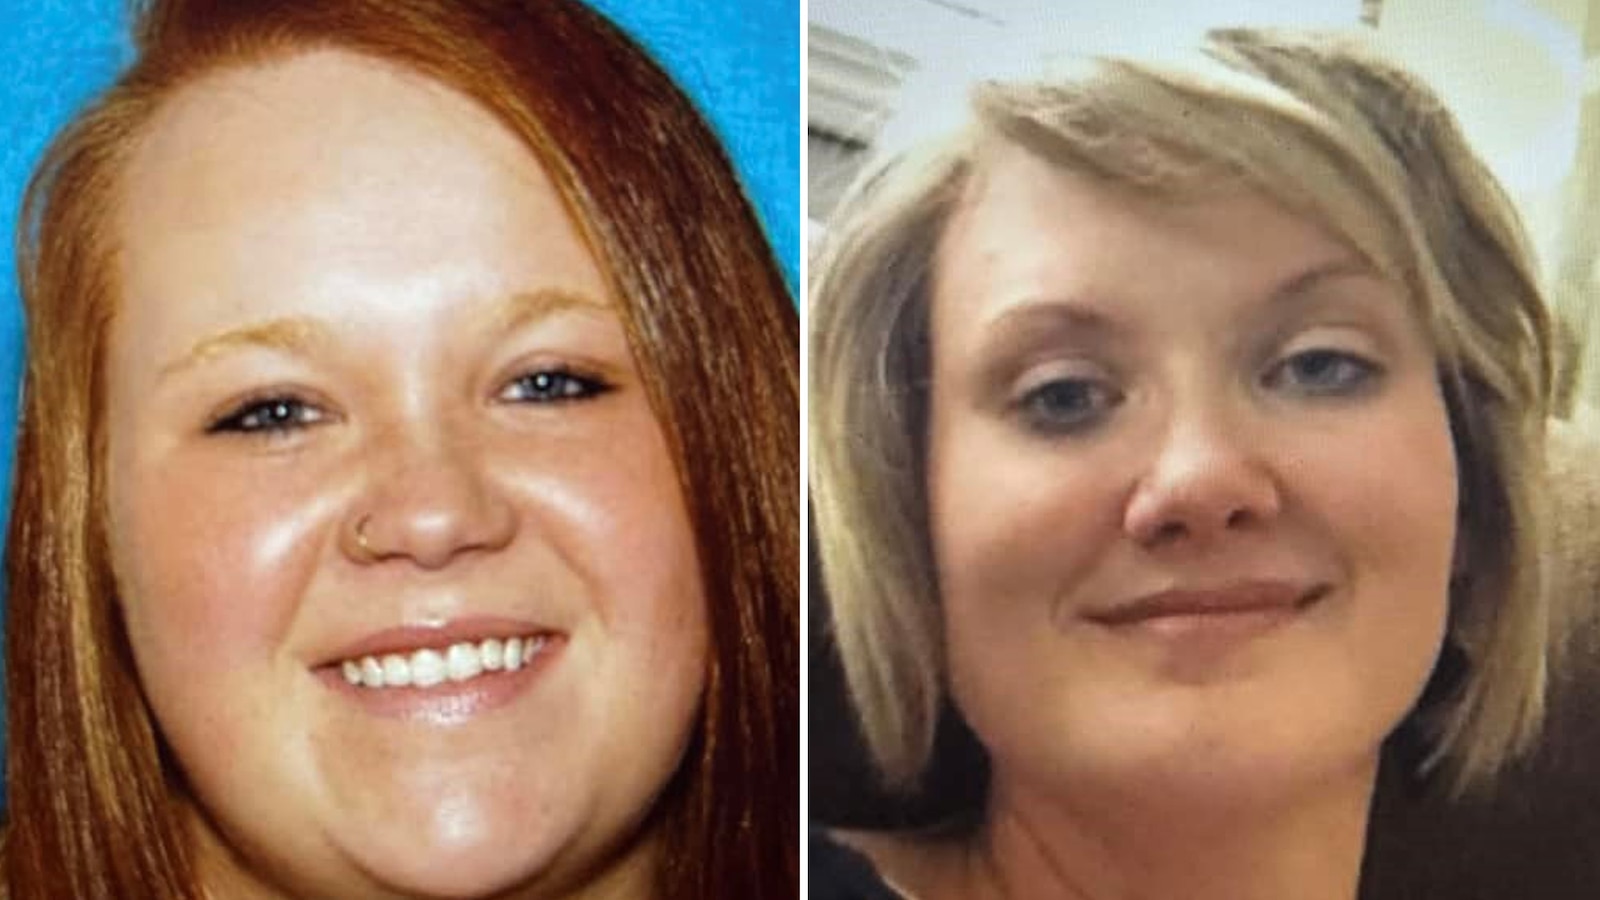 Oklahoma medical examiner positively identifies recovered bodies as Kansas women